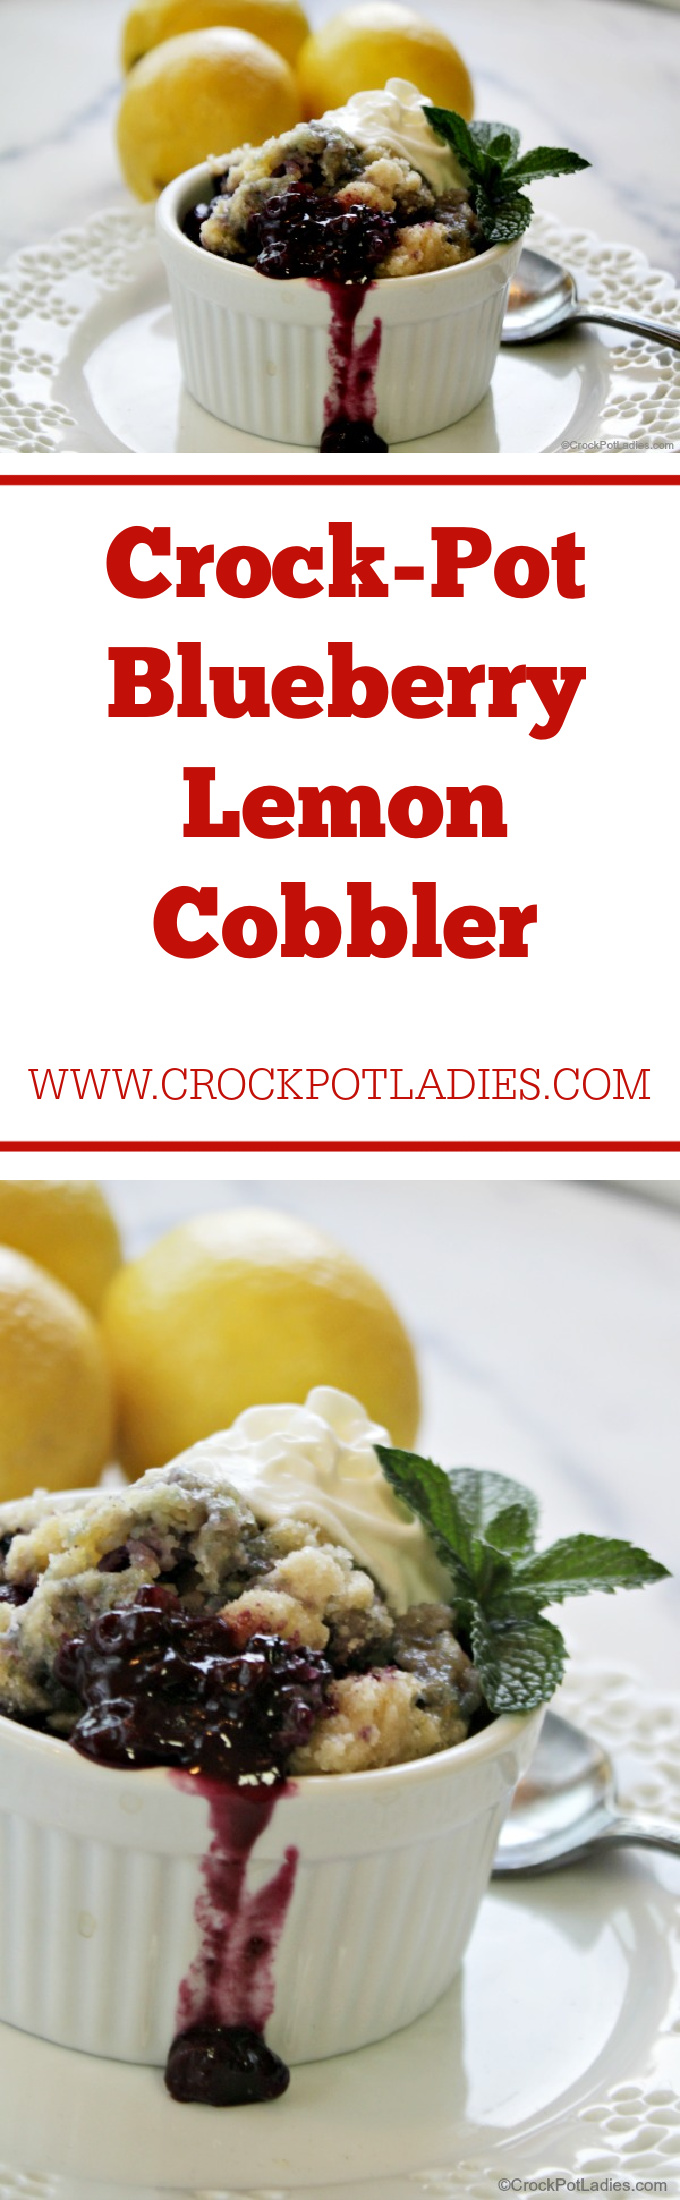 Crock-Pot Blueberry Lemon Cobbler